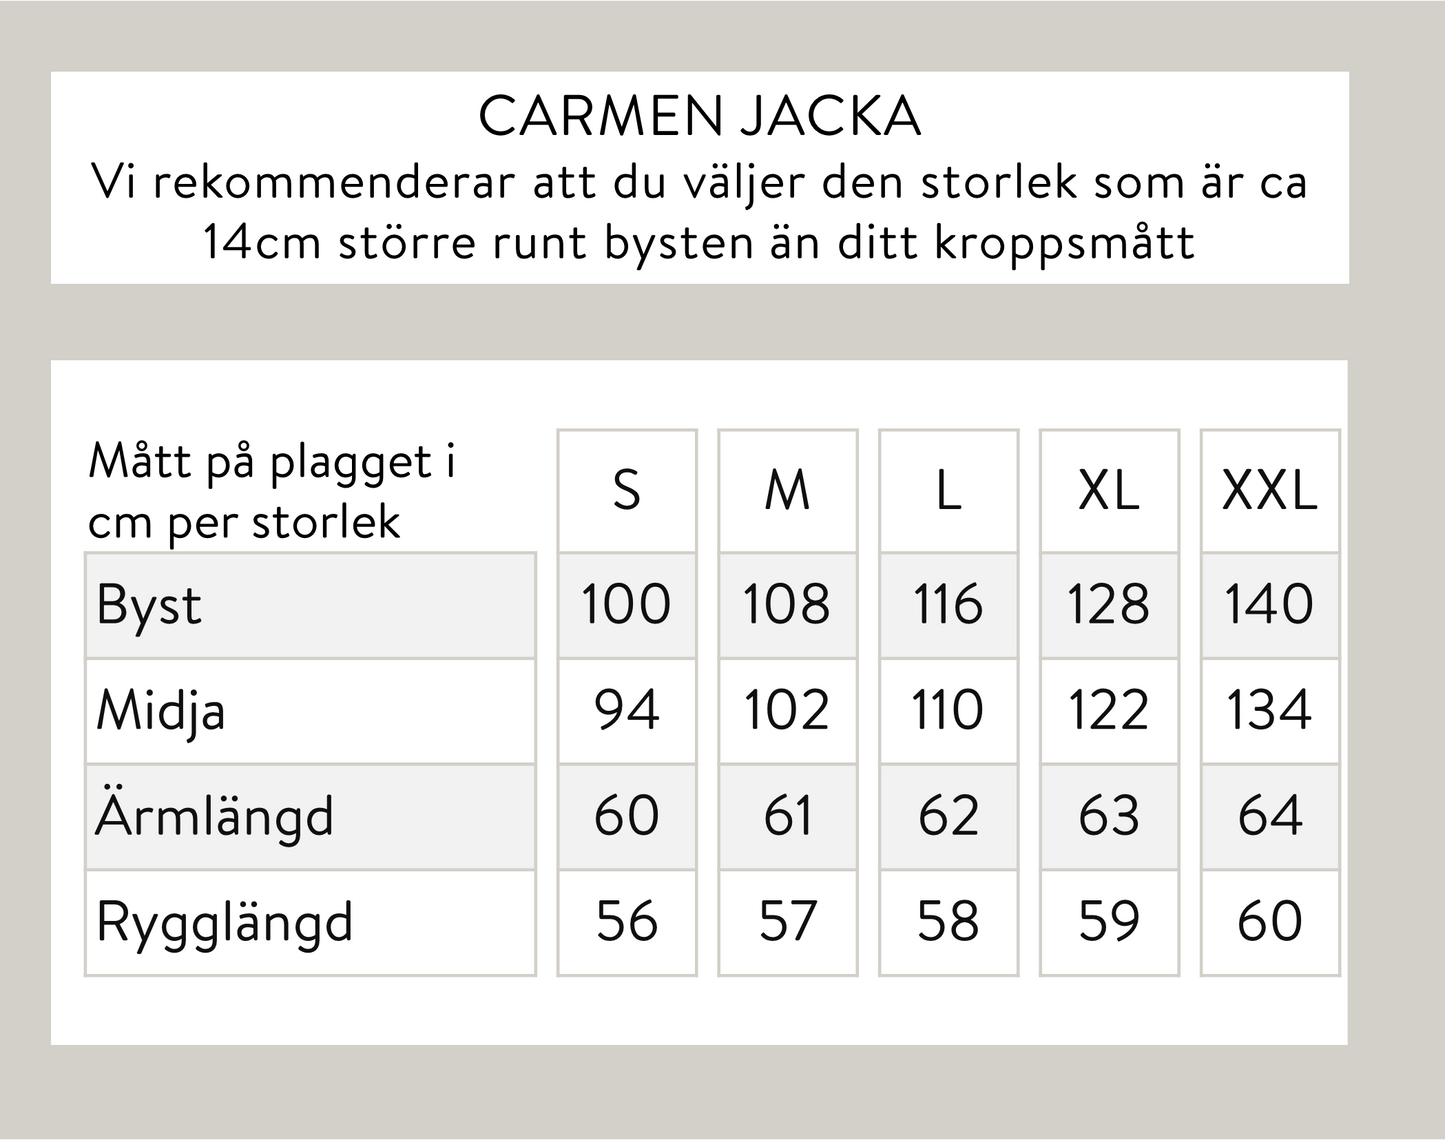 Carmen jacka - vit